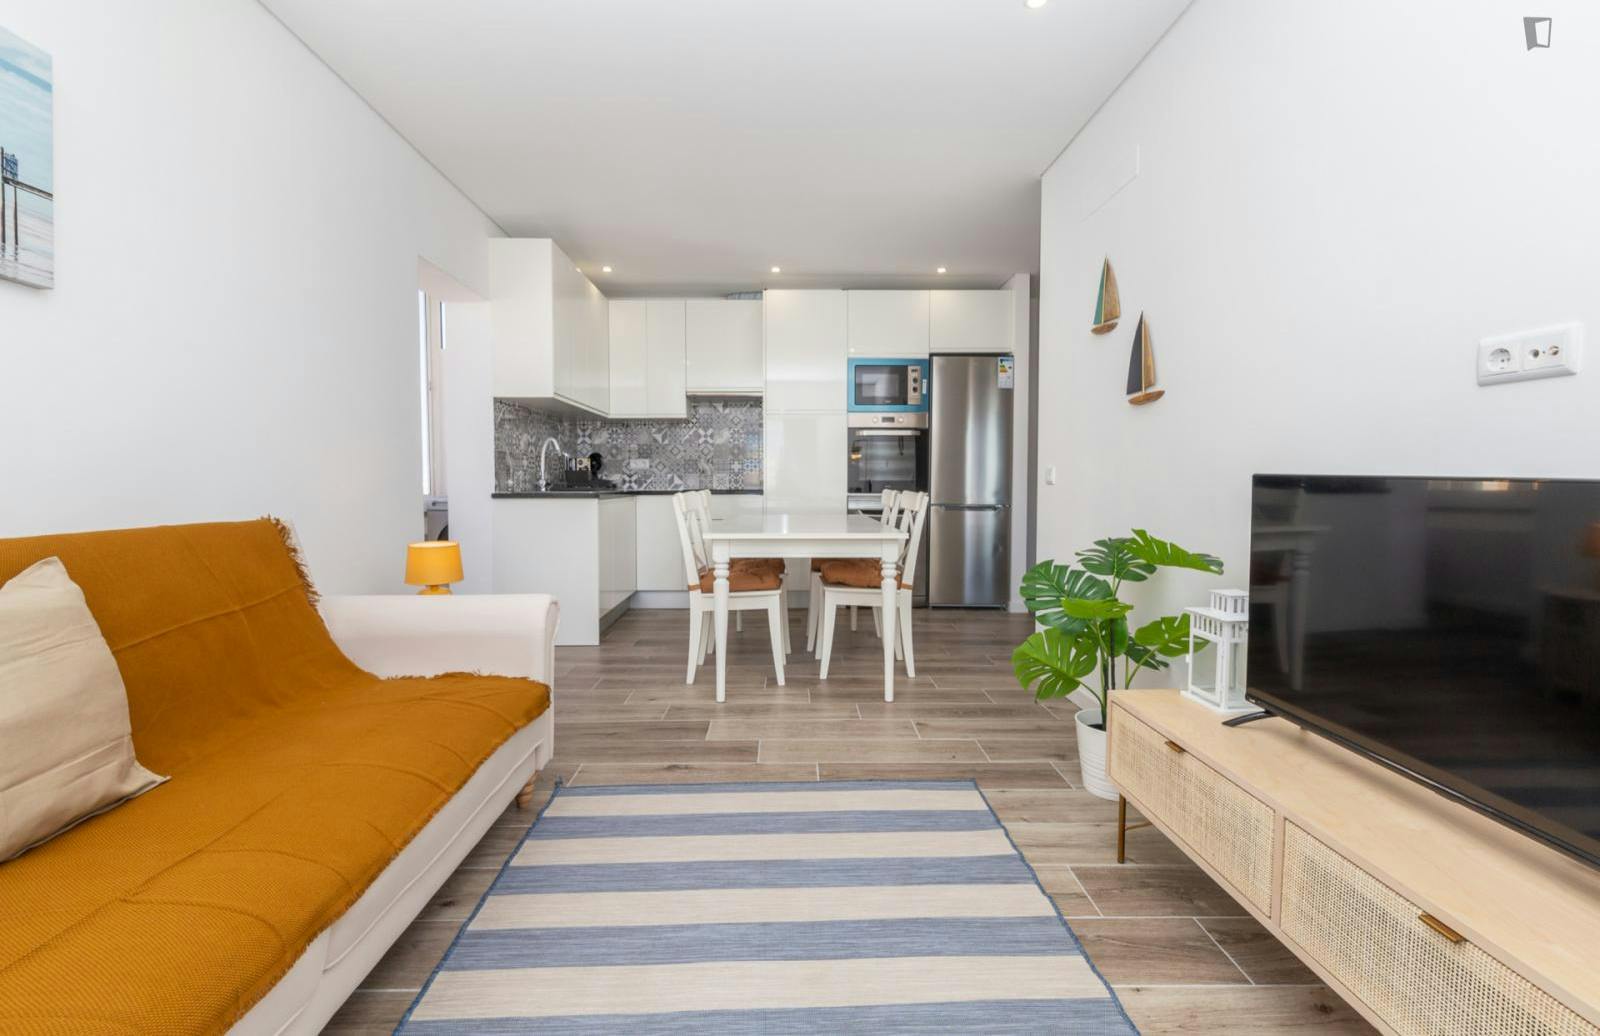 Neat 2-bedroom flat in Olhão